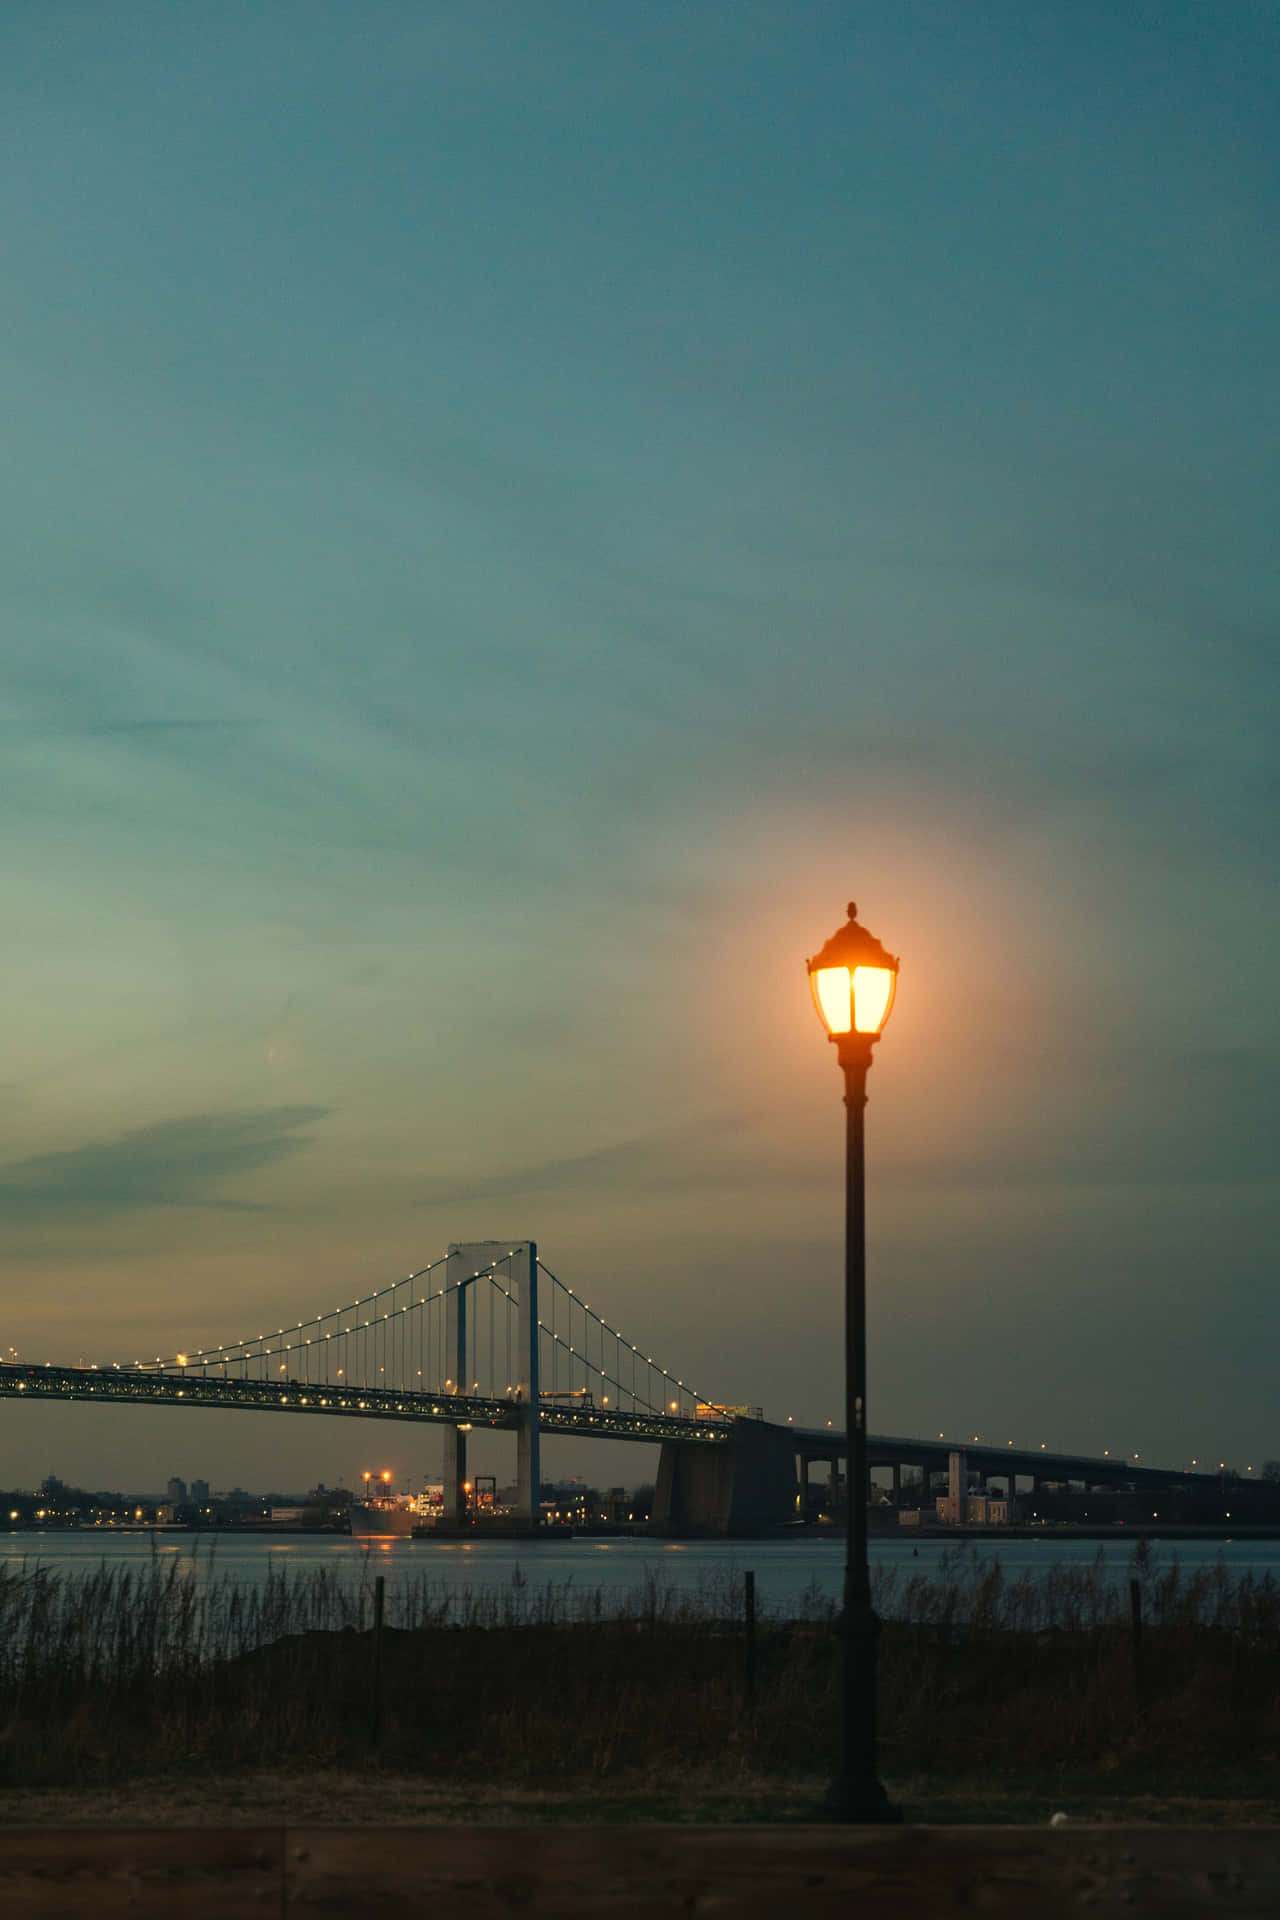 Lamp Post And Bridge Under Evening Sky Wallpaper